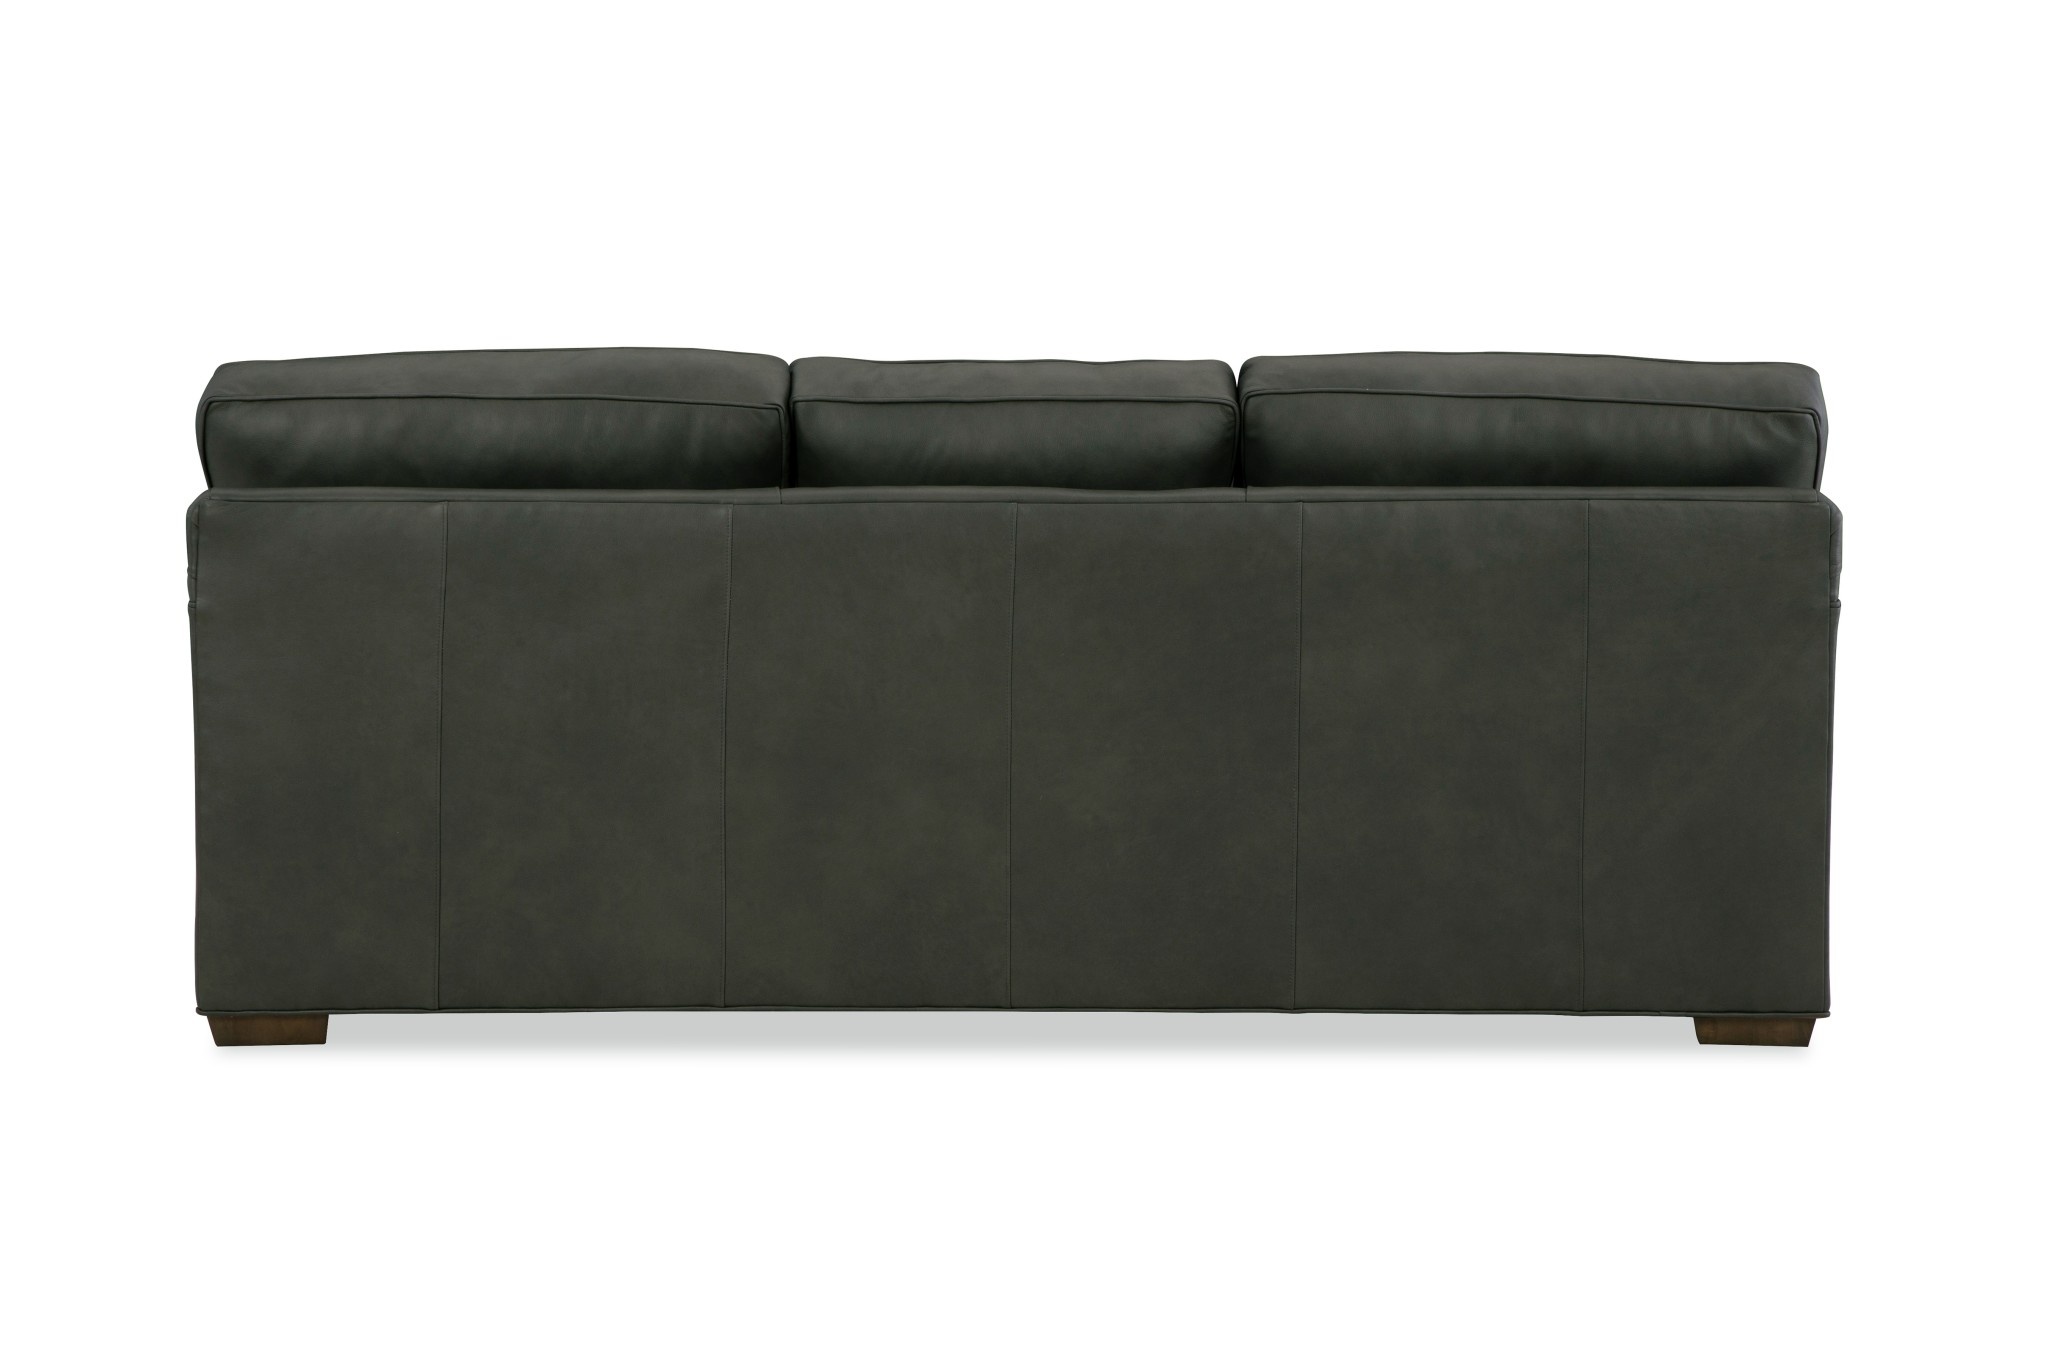 Craftmaster Furniture 7232 Leather Sofa